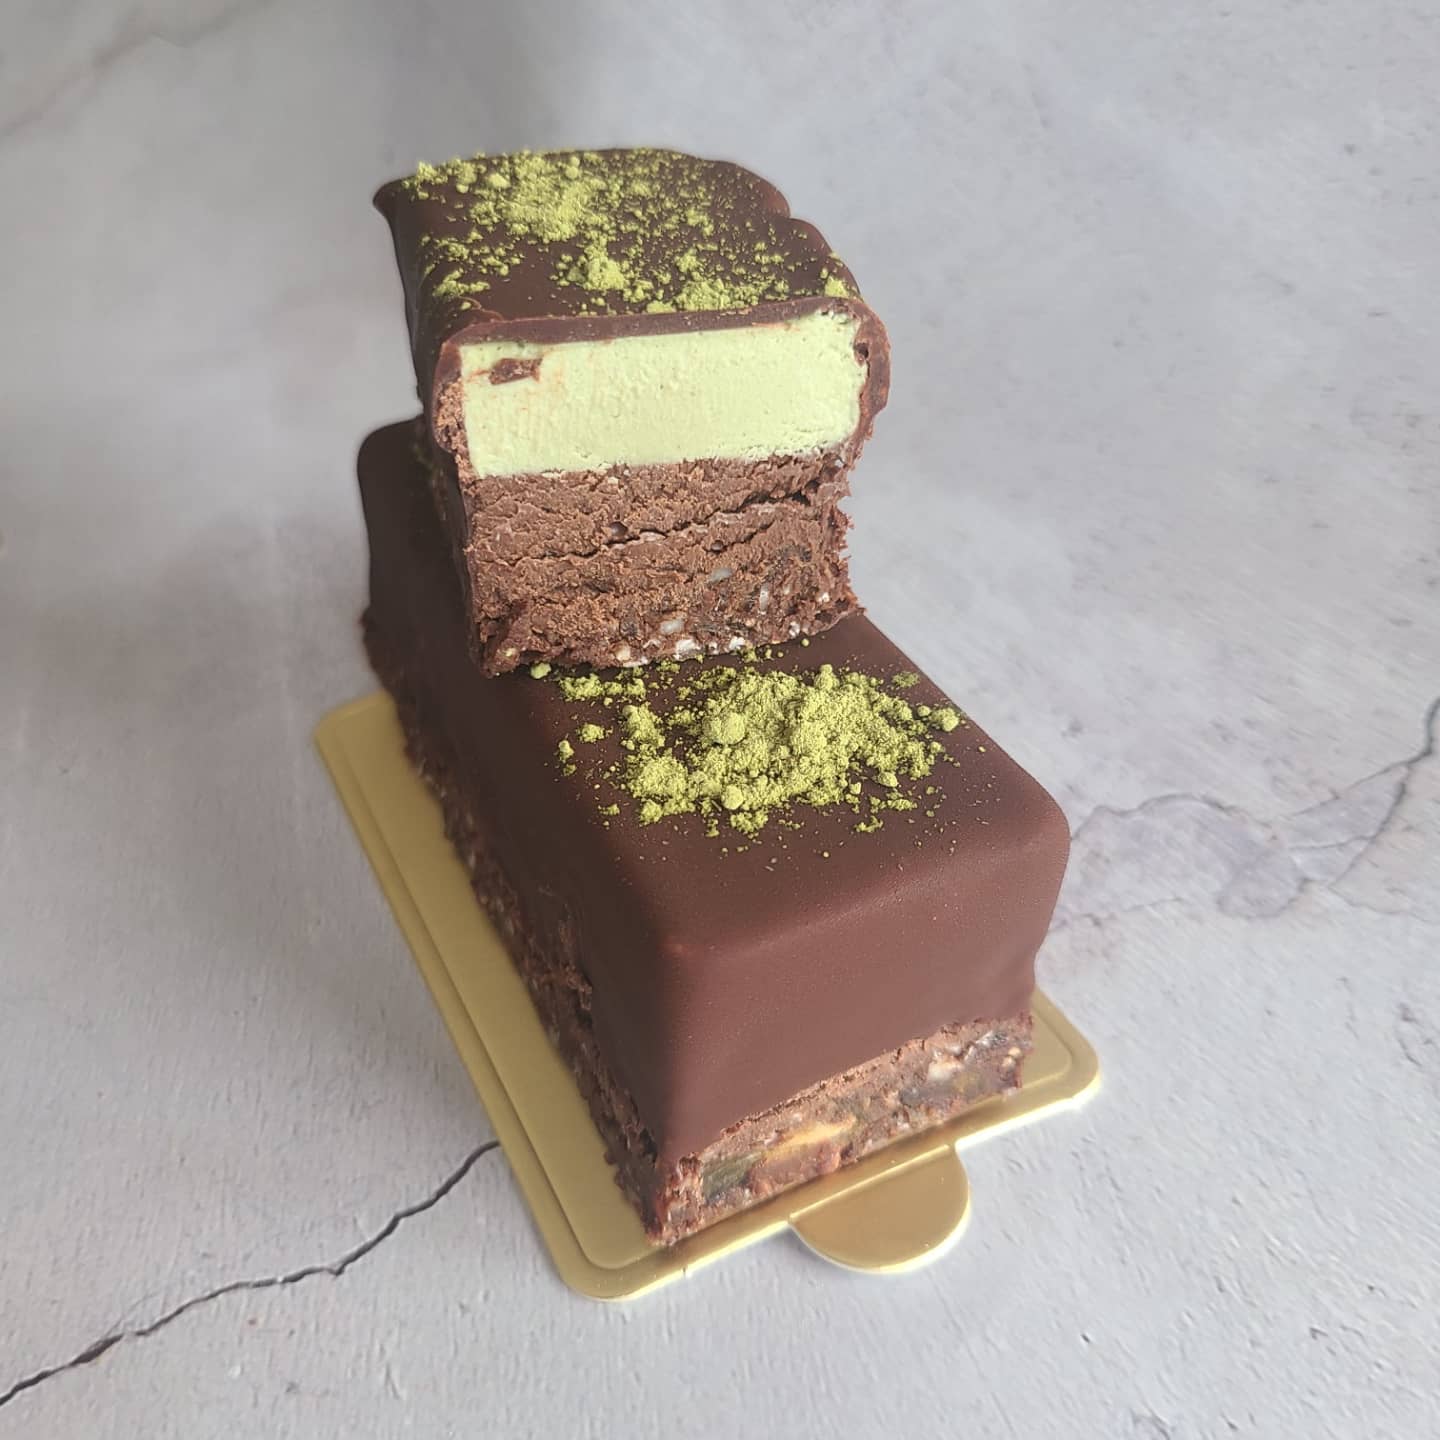 Chocolate-Matcha bars